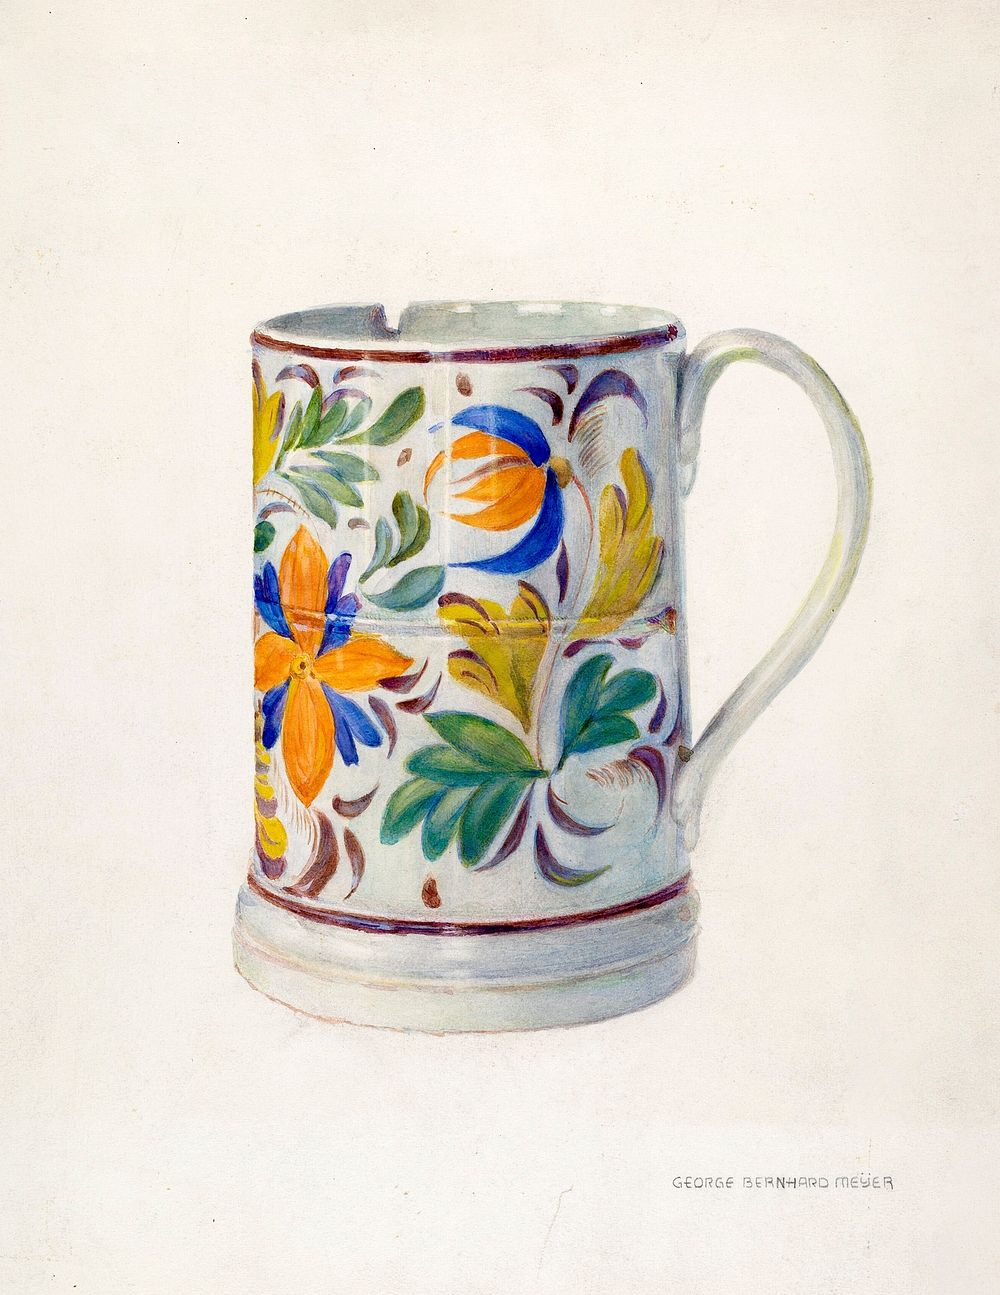 Mug (ca. 1942) by George B.Meyer. Original from The National Gallery of Art. Digitally enhanced by rawpixel.